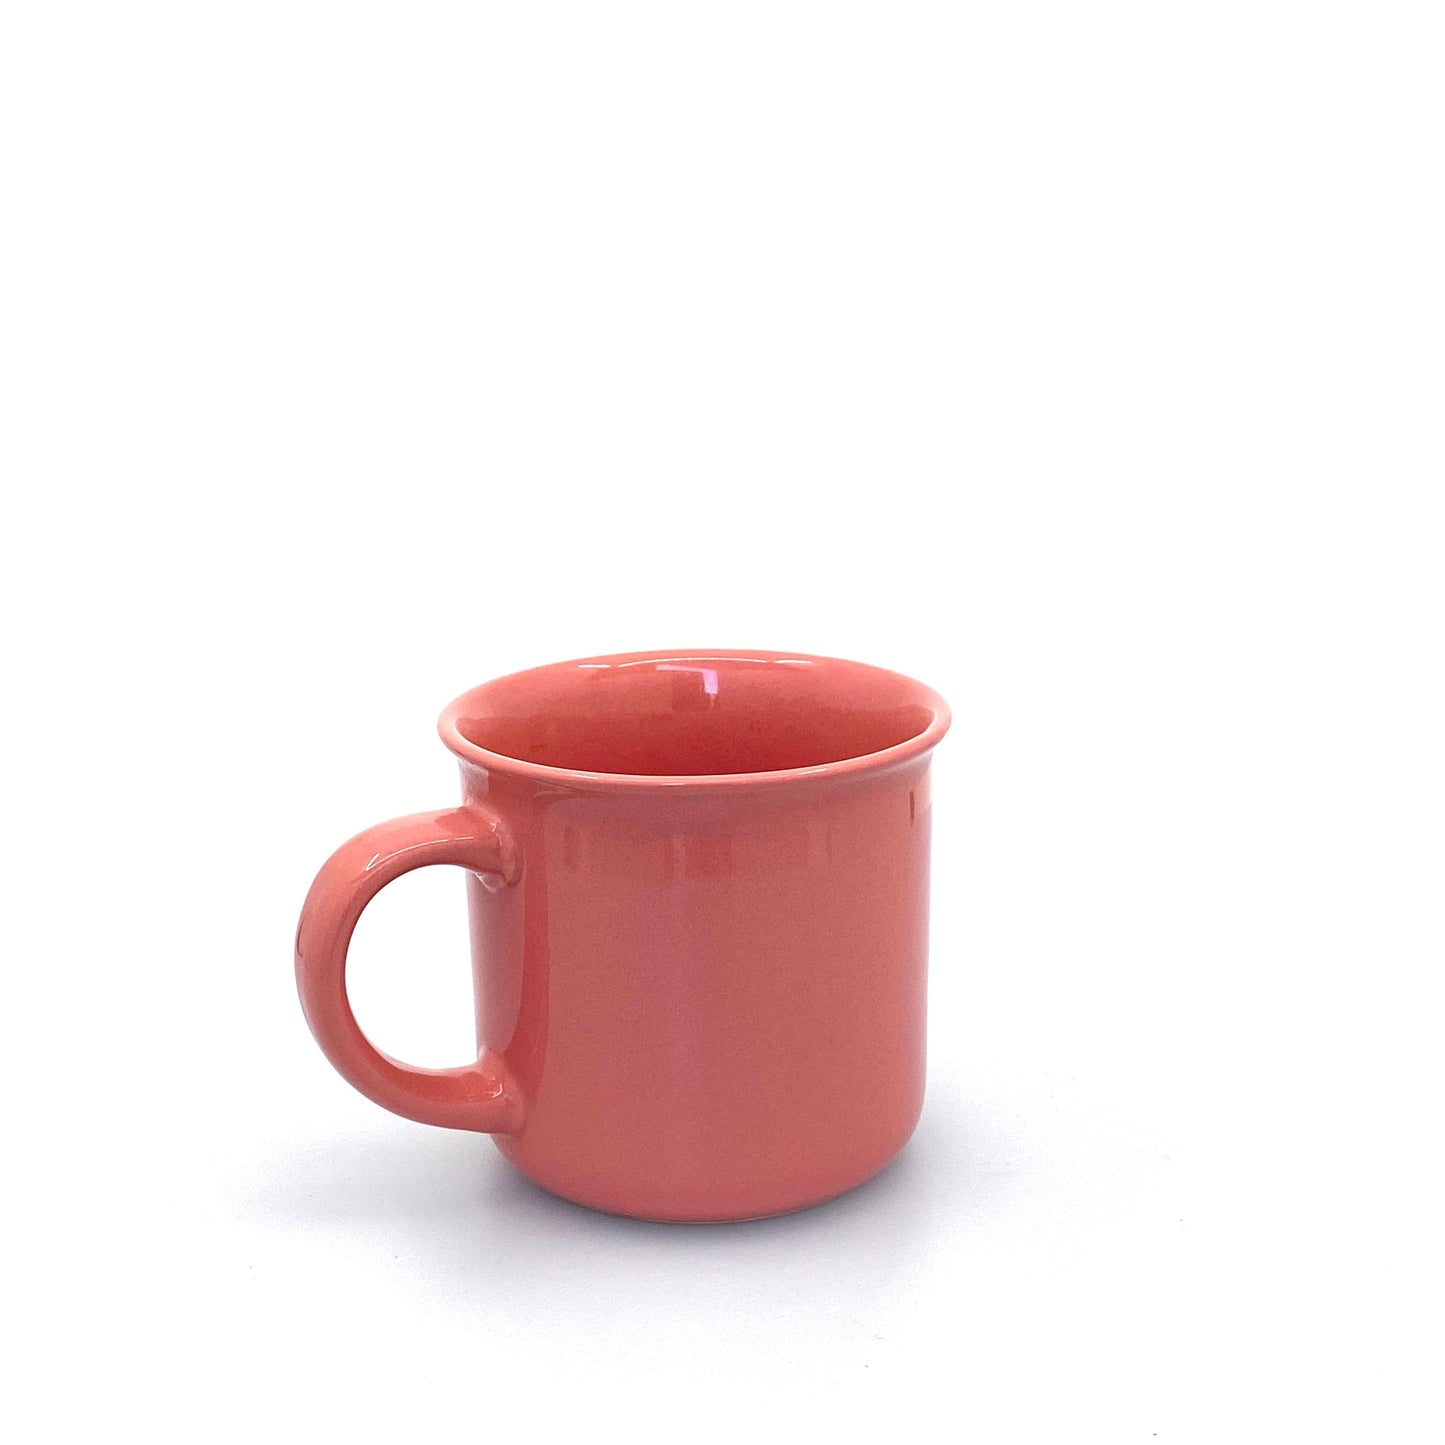 Leo Horoscope Novelty Coffee Cup Mug Humor Rose Pink 14 Fl Oz